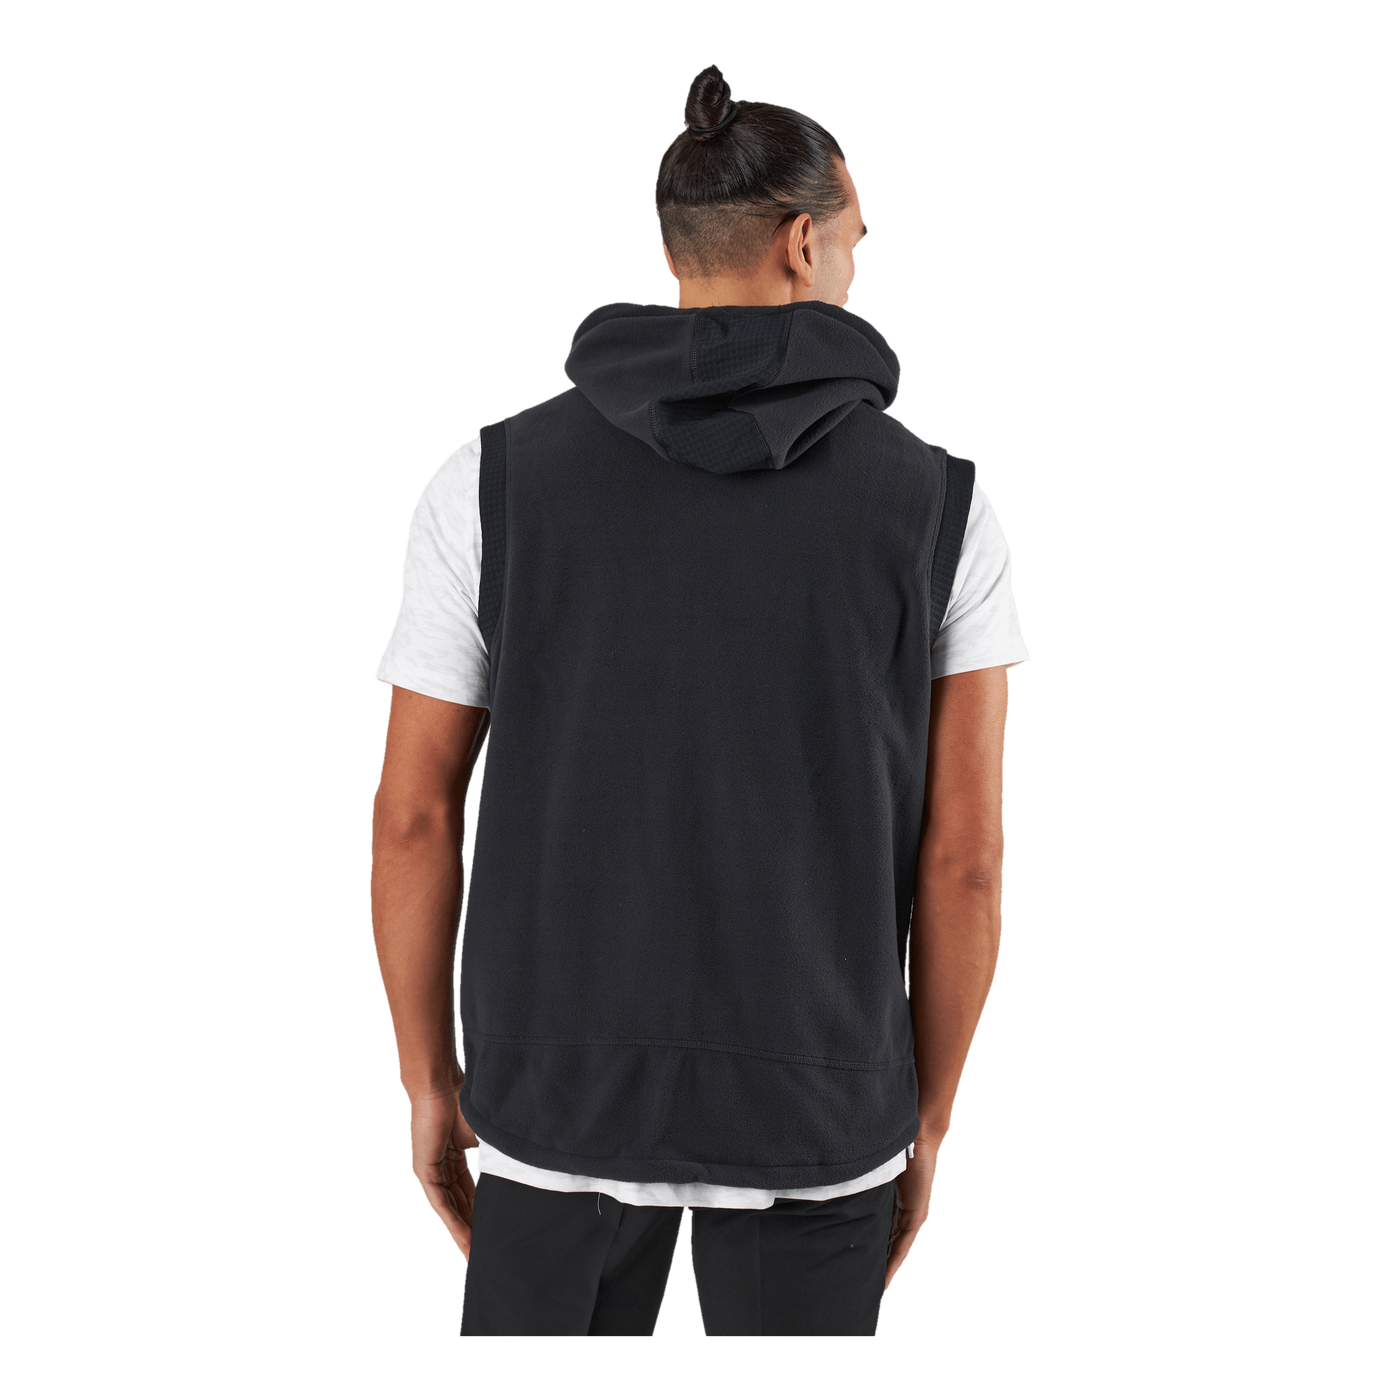 Statement Full-Zip Hooded Vest Black